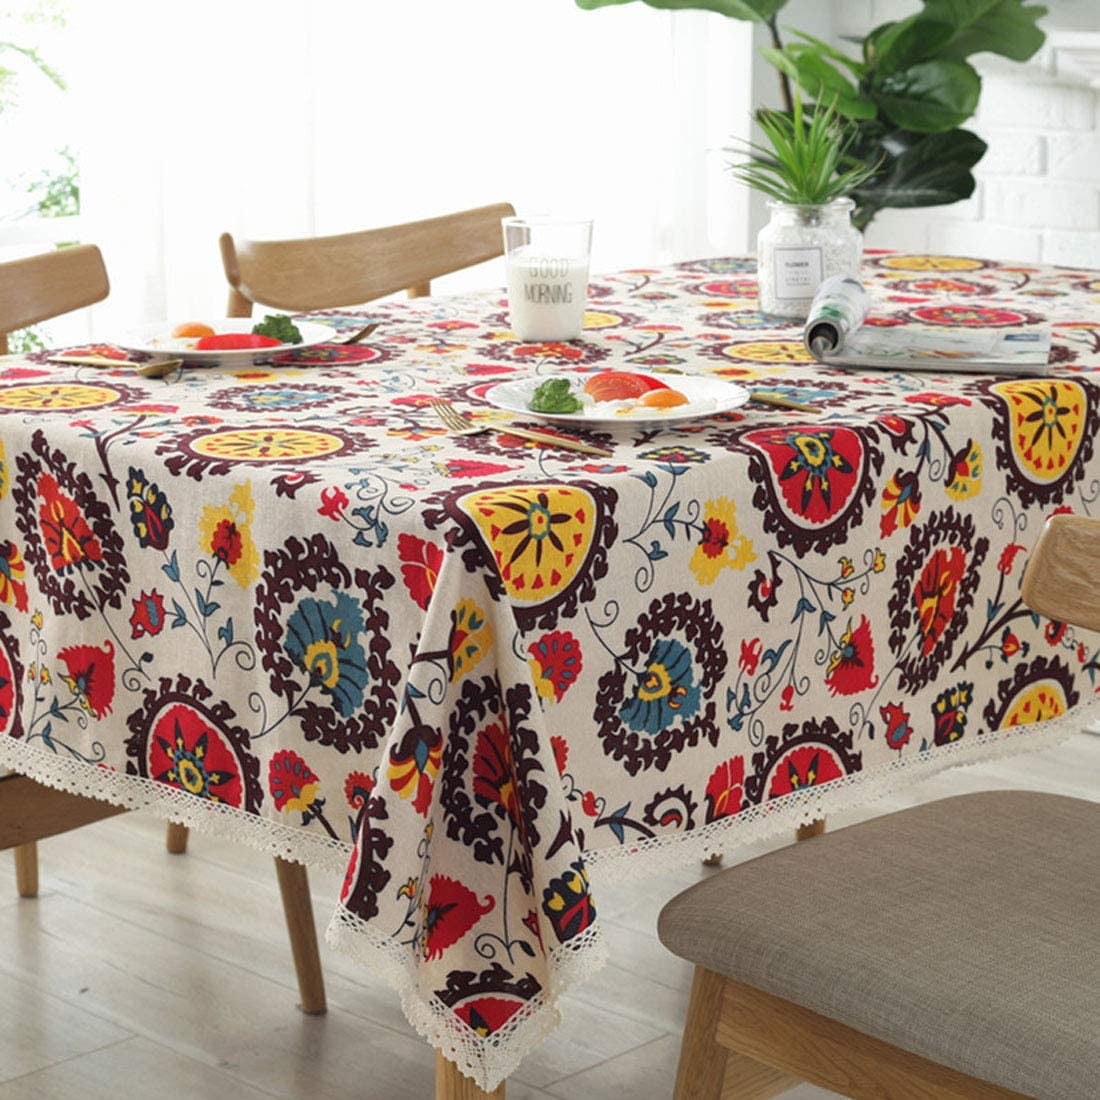 55 x 79 ） Bringsine Rectangular Cotton Linen Fashion Mayan Culture Printed Washable Tablecloth Vintage Oblong Dinner Picnic Table Cloth Home Decoration （Rectangle/Oblong